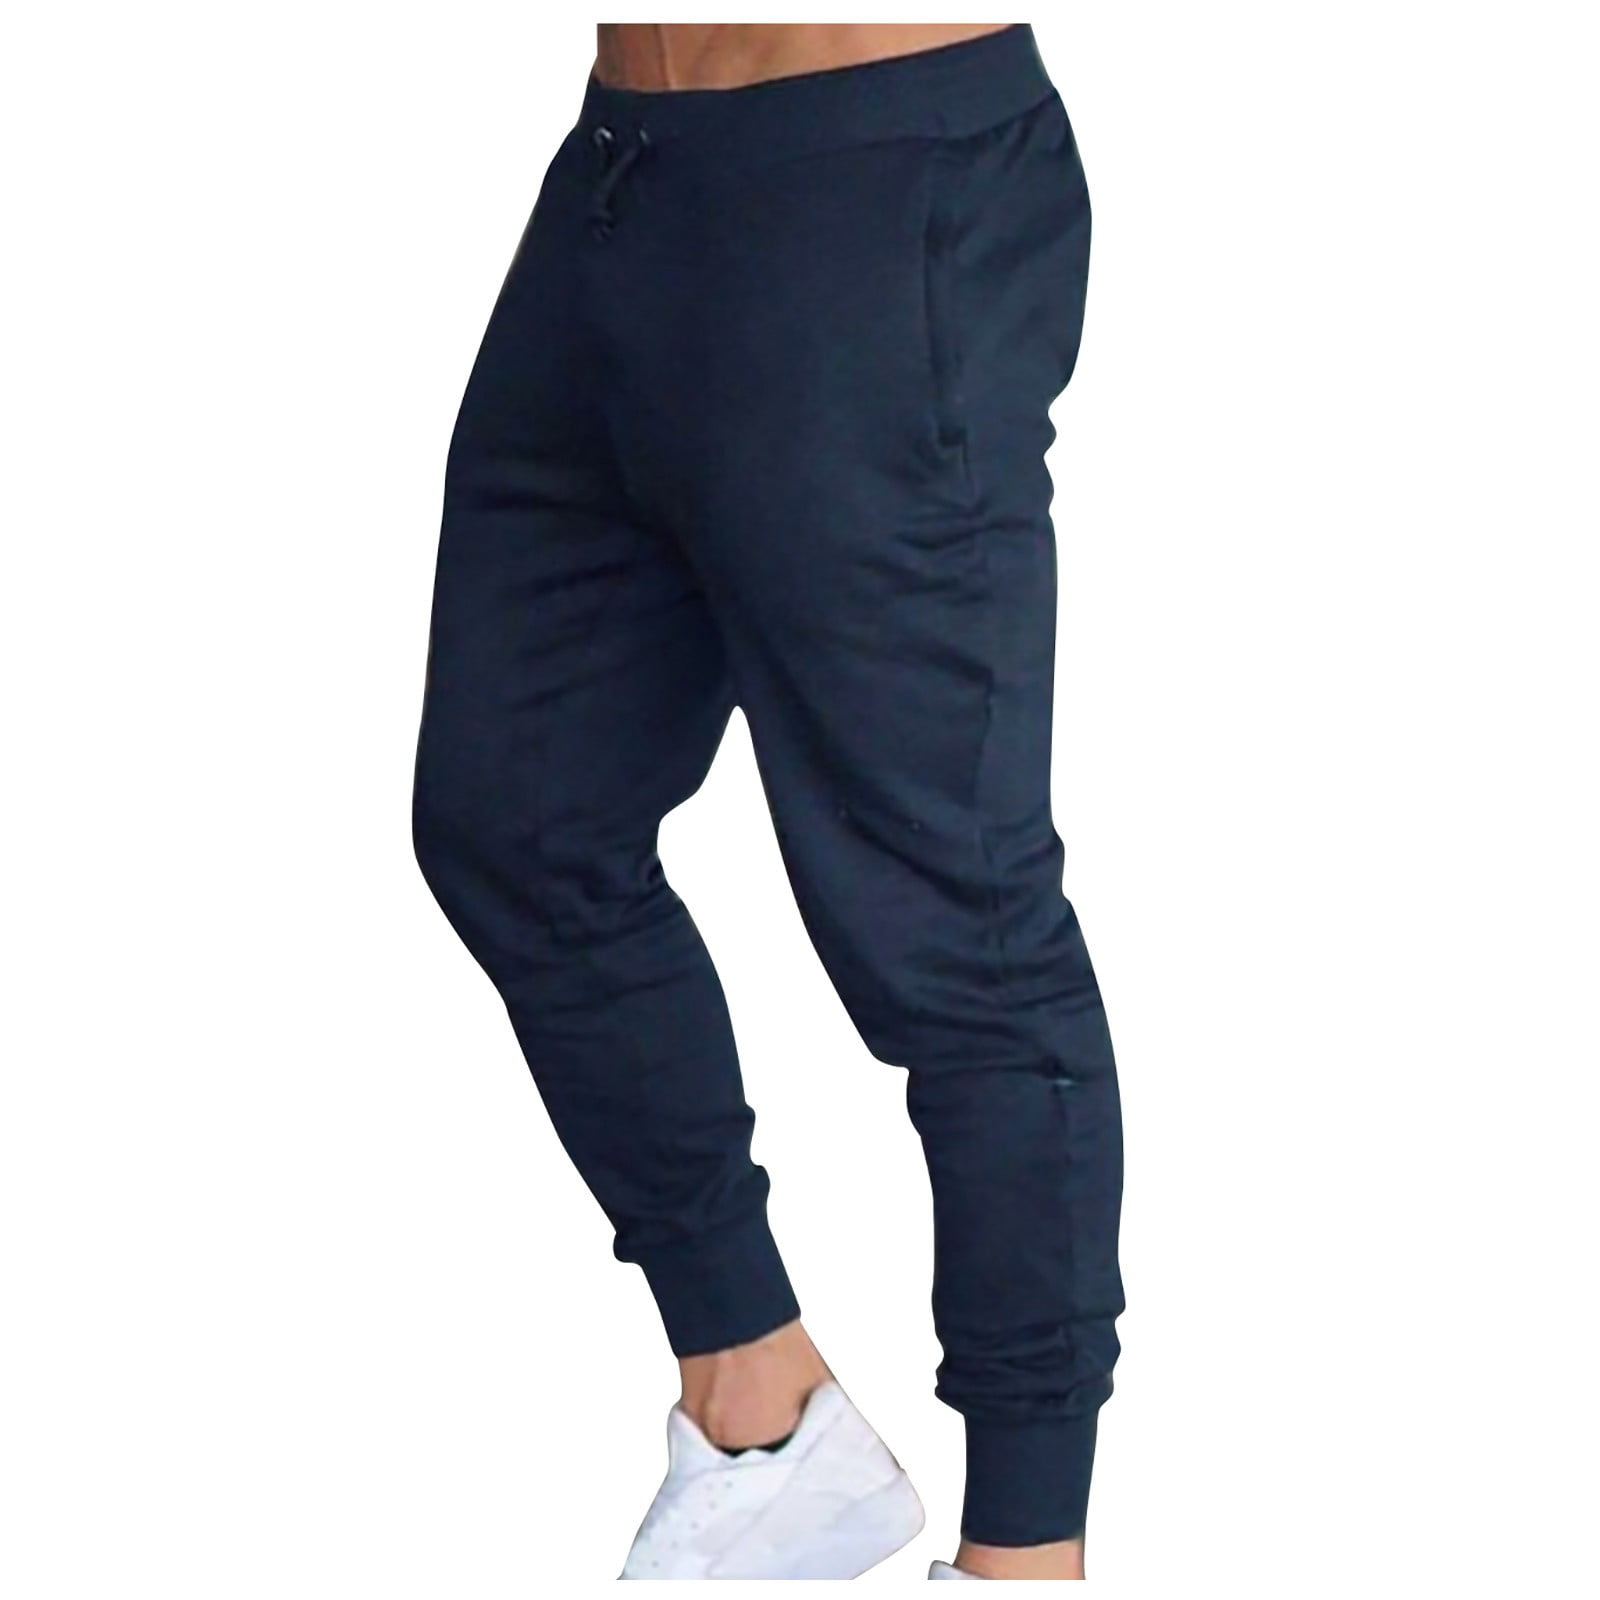 VBXOAE Mens Sweatpants Ice Silk Pants Fitness Running Stretch Yoga Pant  Soft Fitness Jogging Pants 